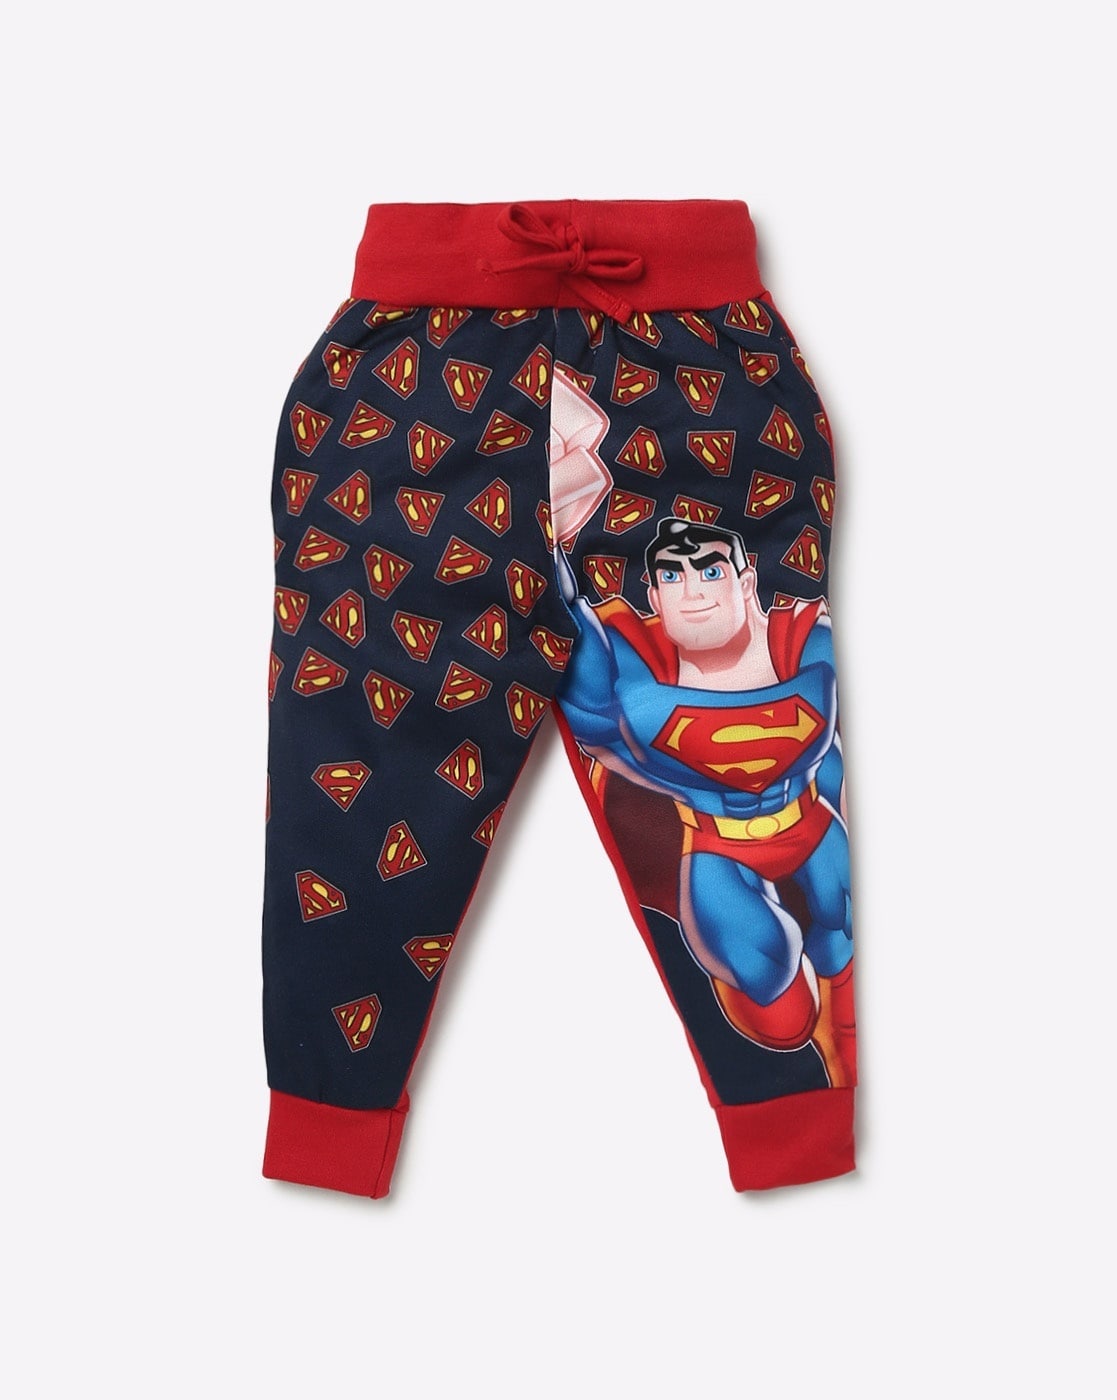 Superman Super Cape - Etsy